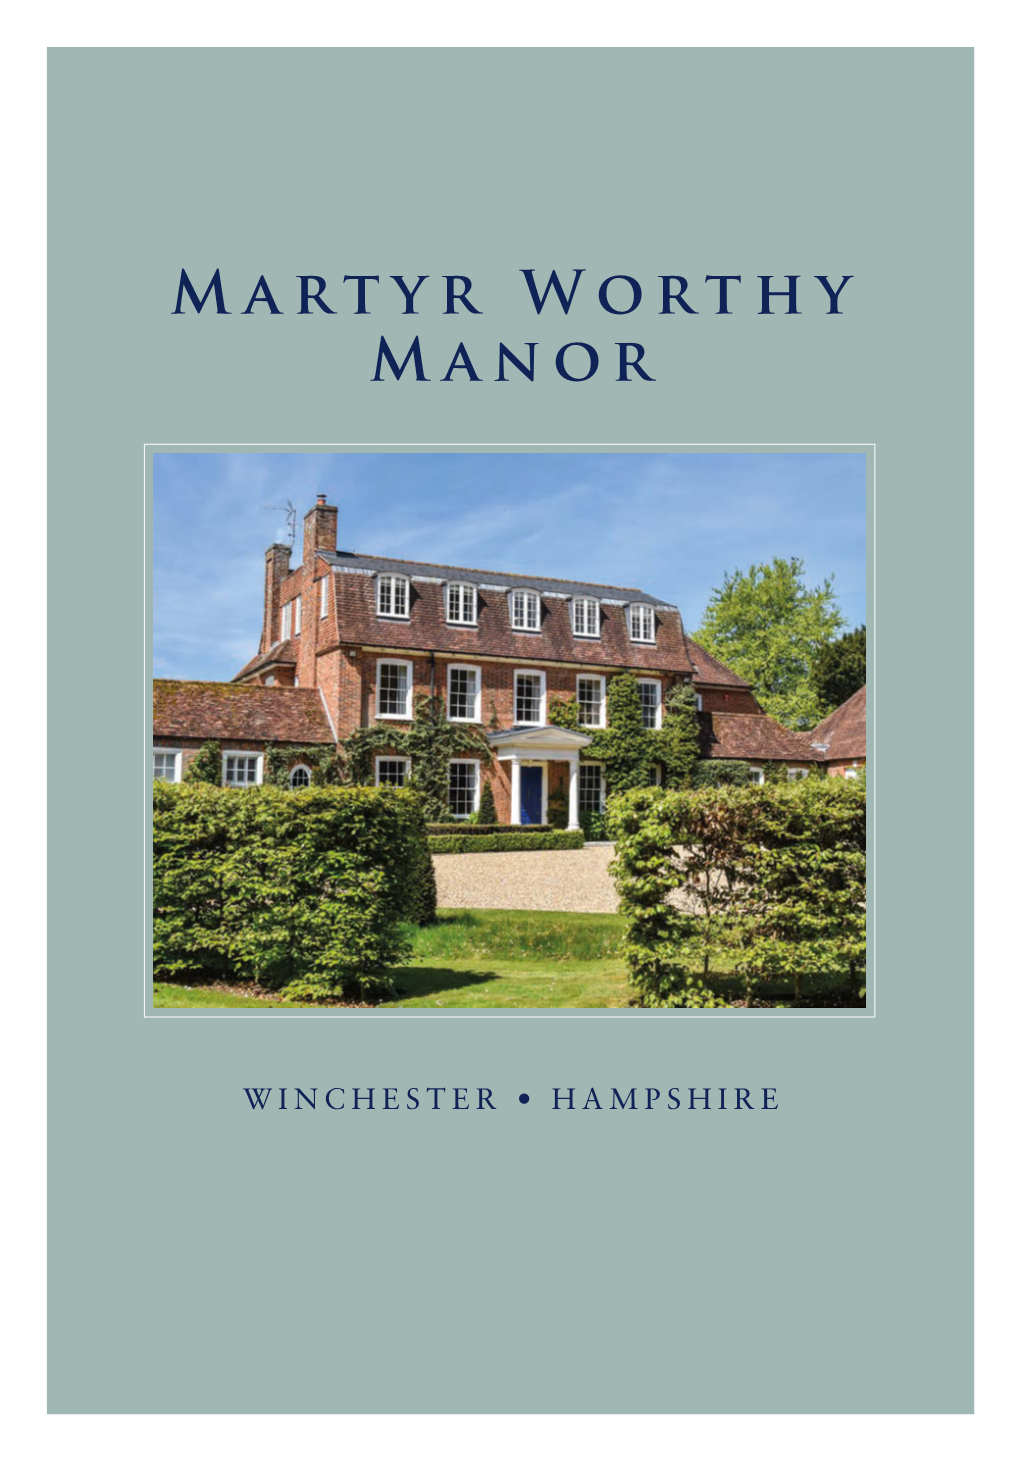 Martyr Worthy Manor